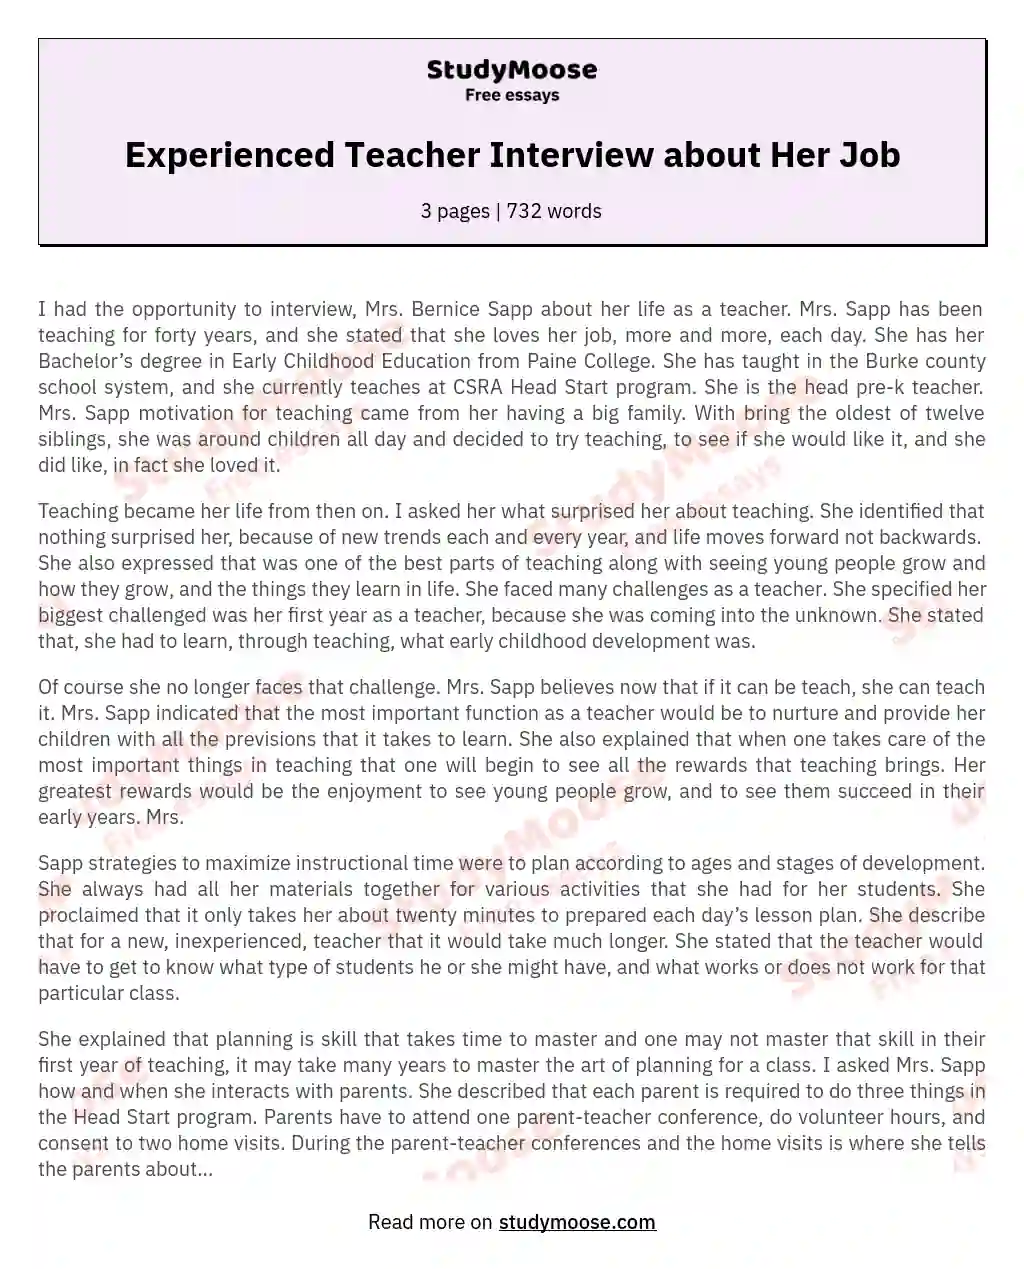 Experienced Teacher Interview about Her Job essay